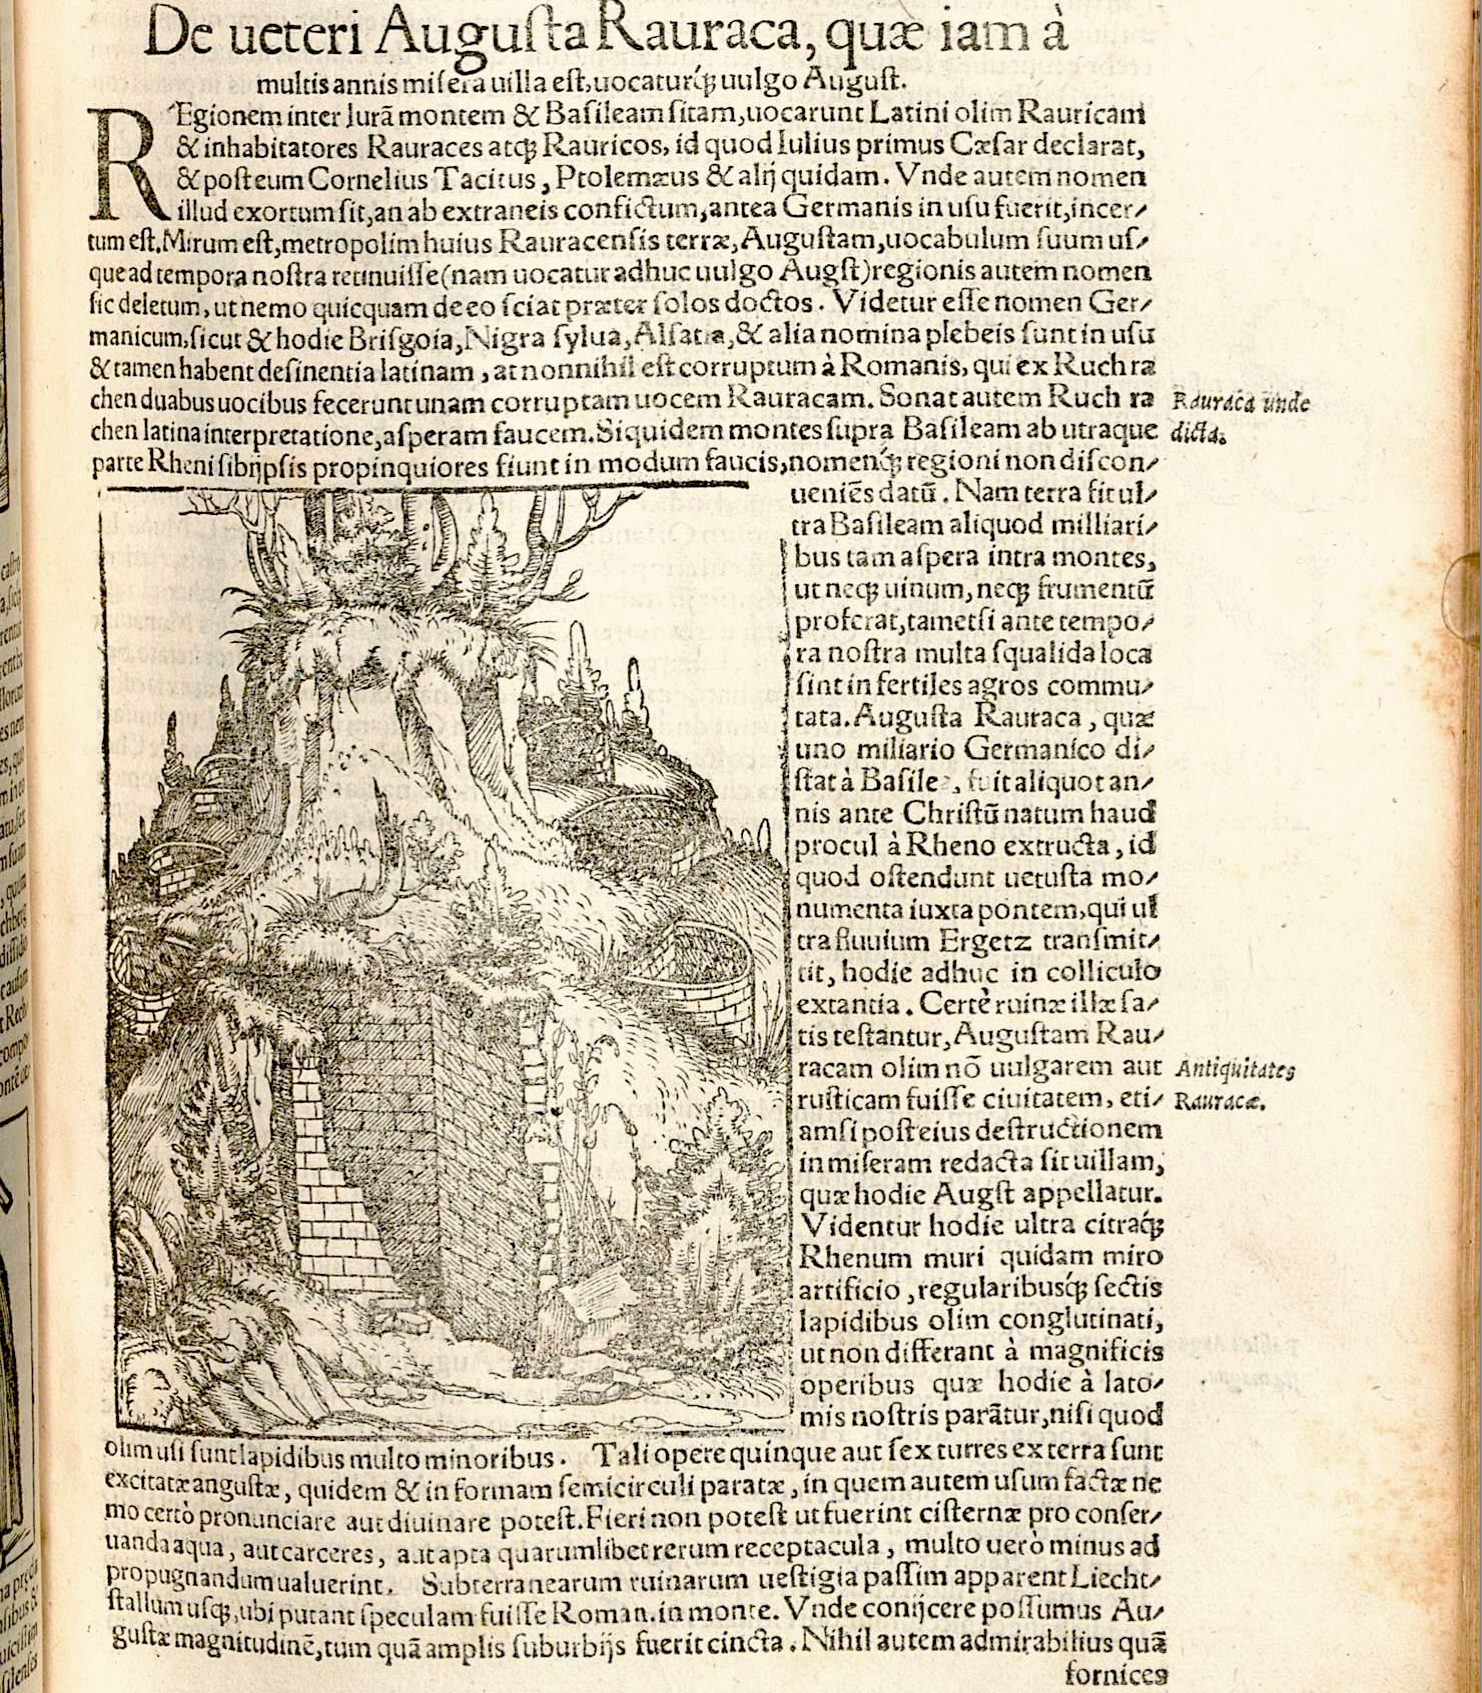 Roman ruins of Augst, from Sebastian Münster's Cosmographia, 1554